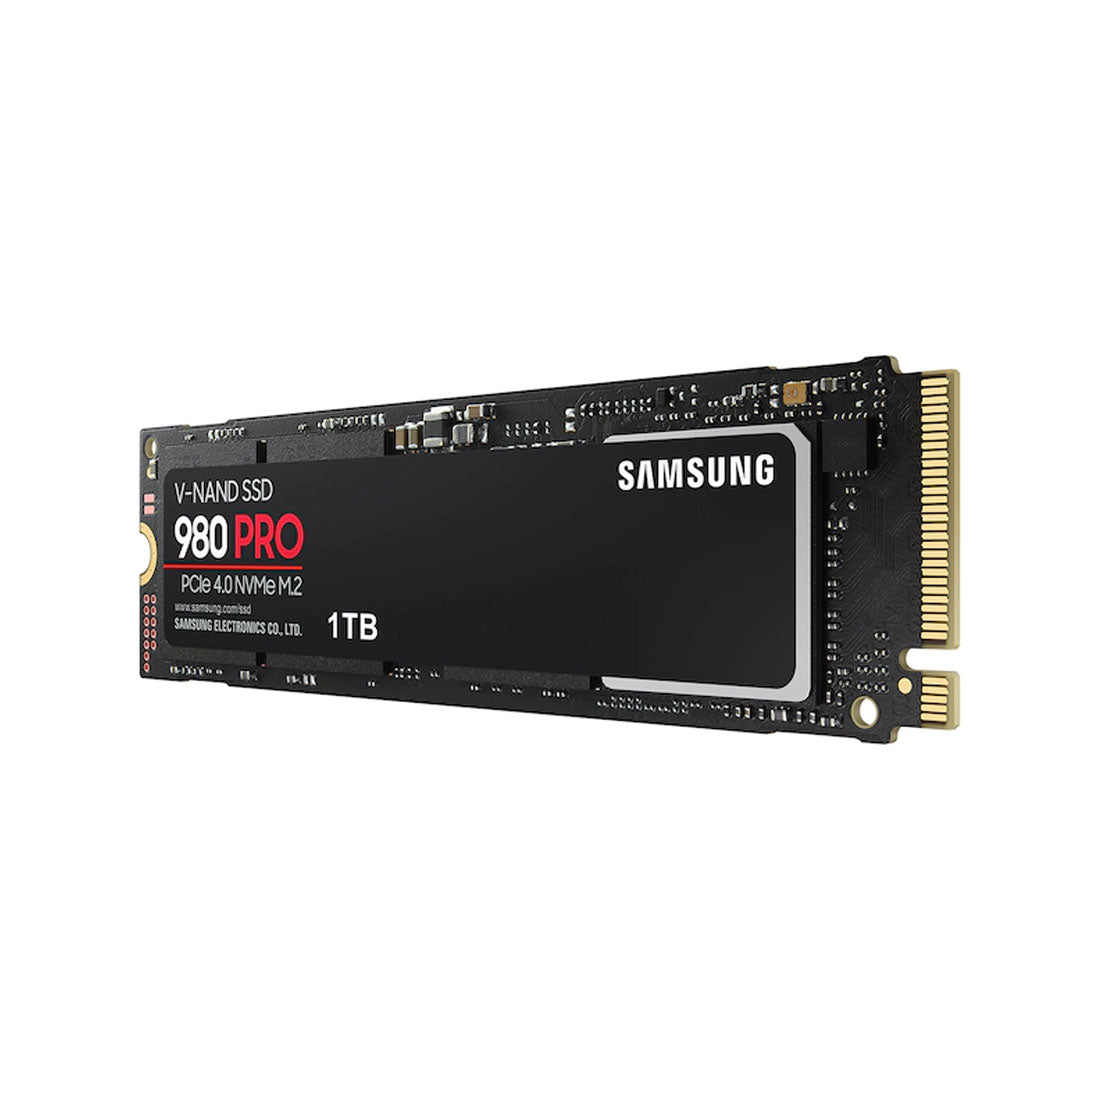 Samsung 980 PRO 1TB M.2 PCIe 4.0 इंटरनल सॉलिड स्टेट ड्राइव